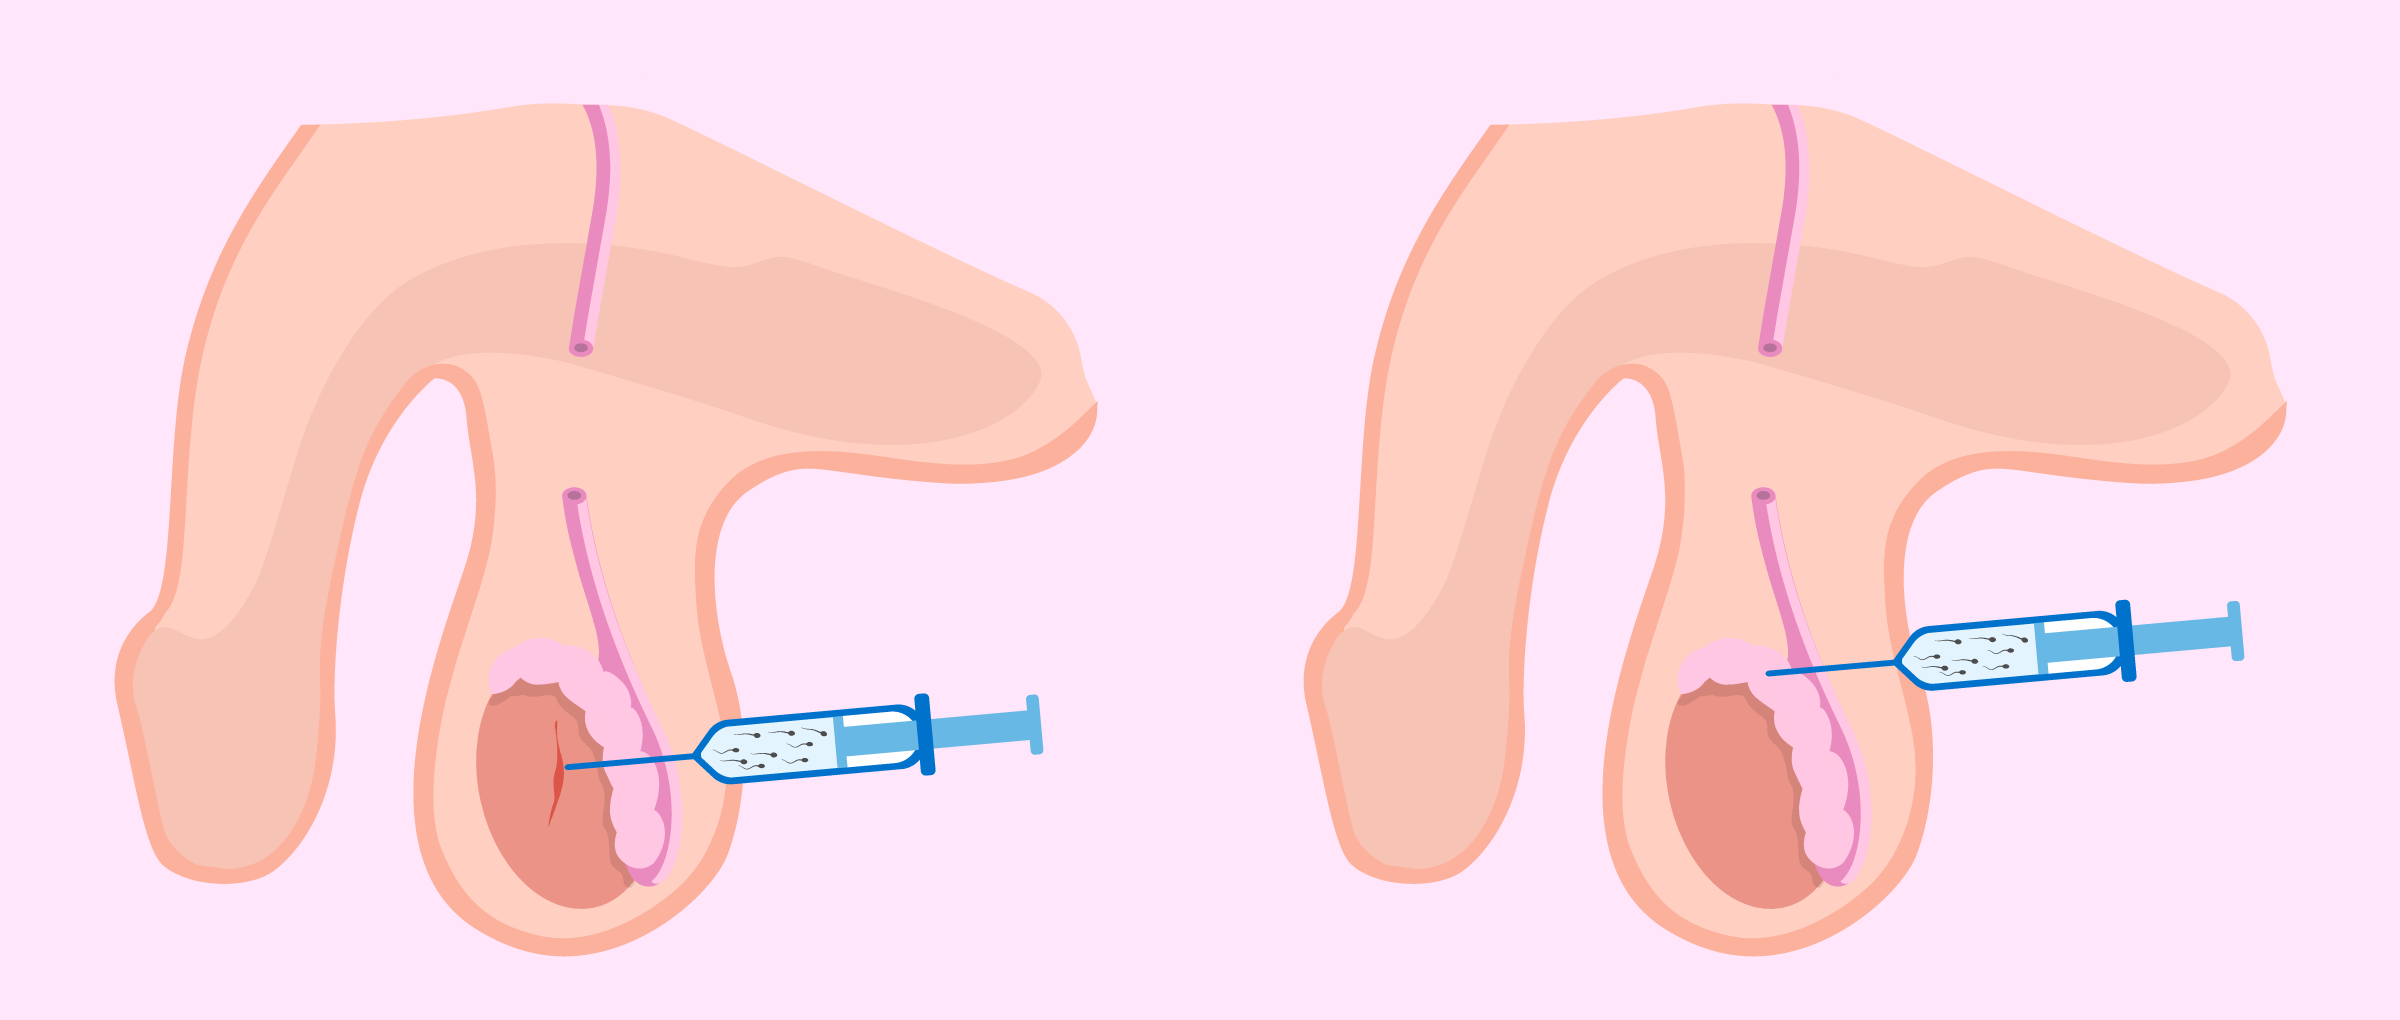 Epididymal and testicular sperm aspiration